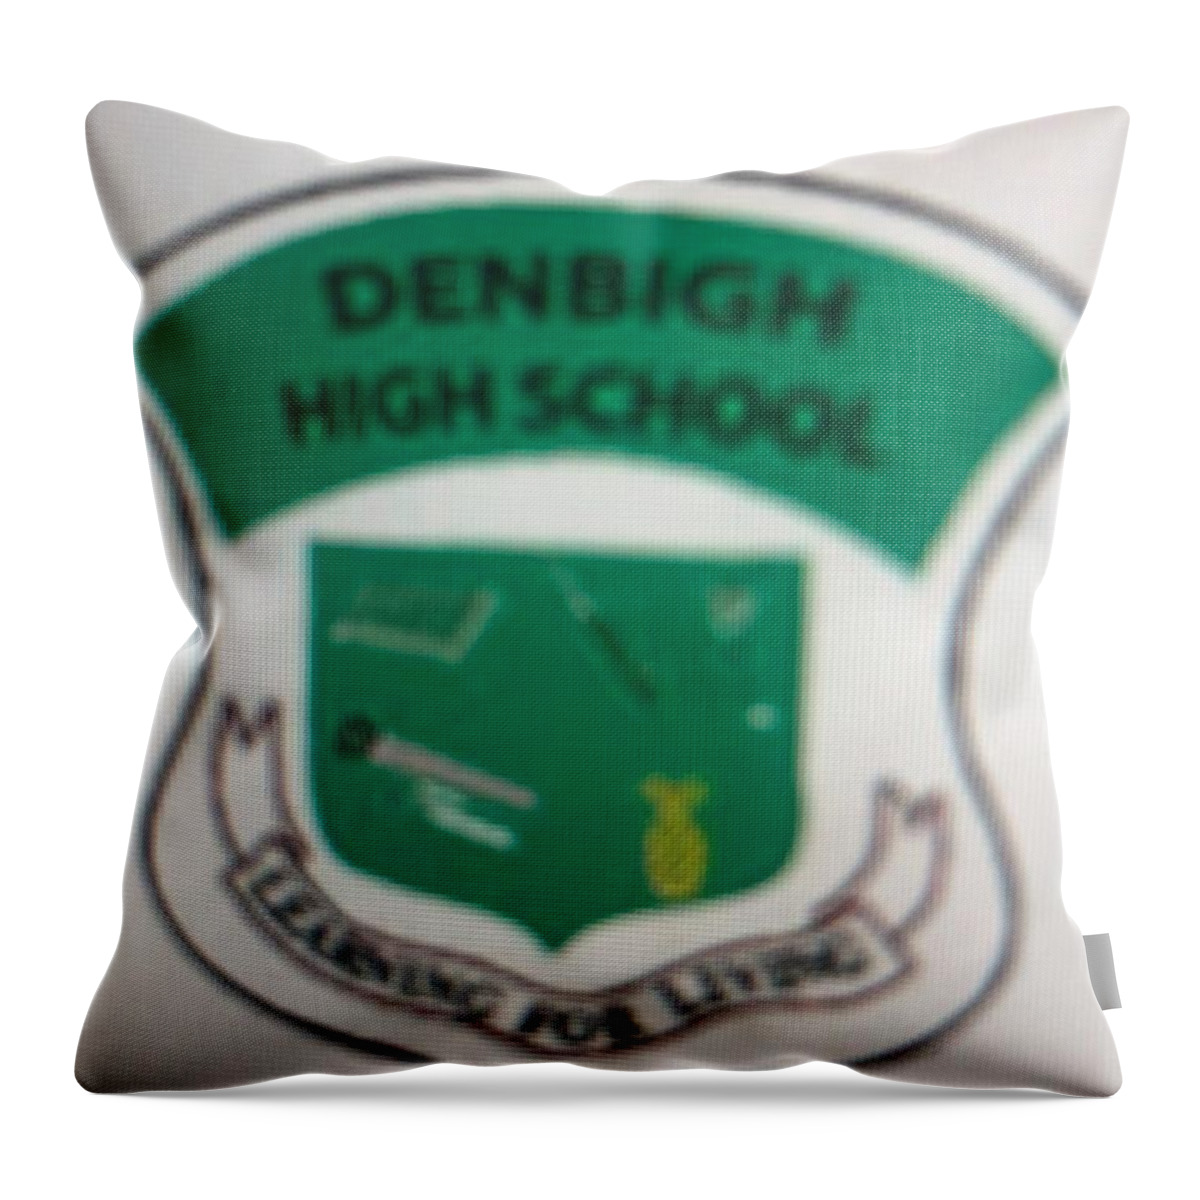  Throw Pillow featuring the photograph Denbigh High School by Trevor A Smith